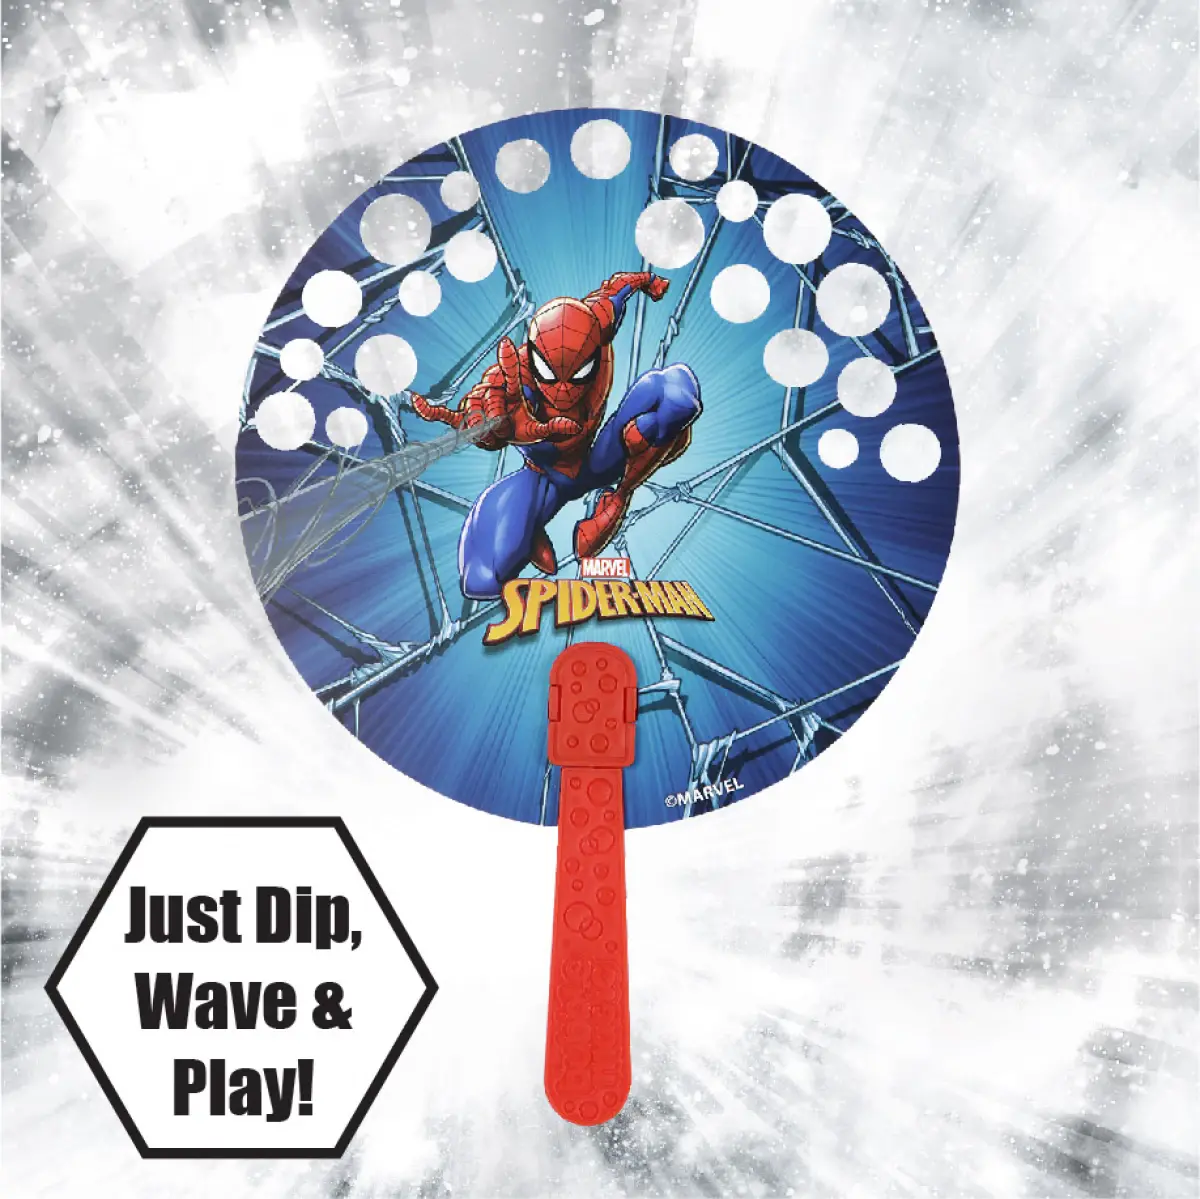 Bubble Magic Fan Bubs Spiderman Theme Bubble Solution For Kids of Age 3Y+, Multicolour